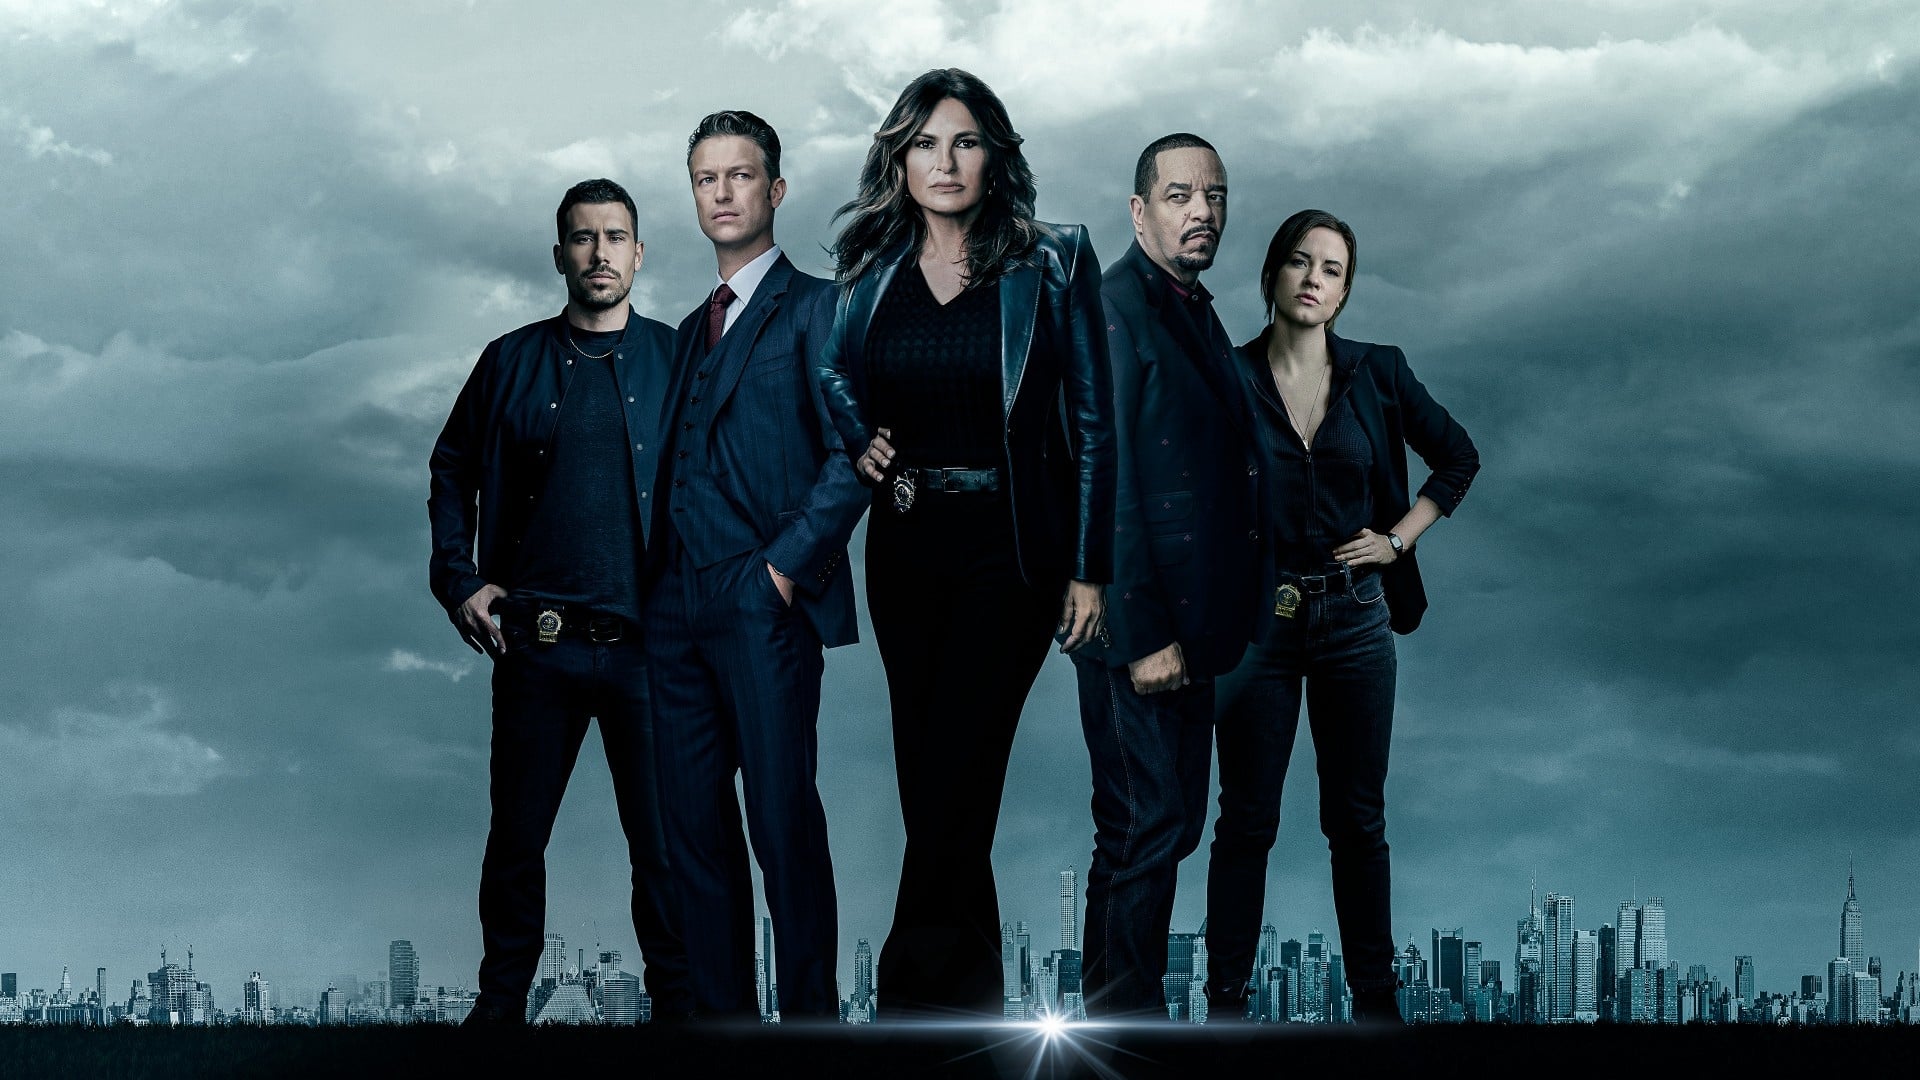 Law & Order: Special Victims Unit - Season 12 Episode 4